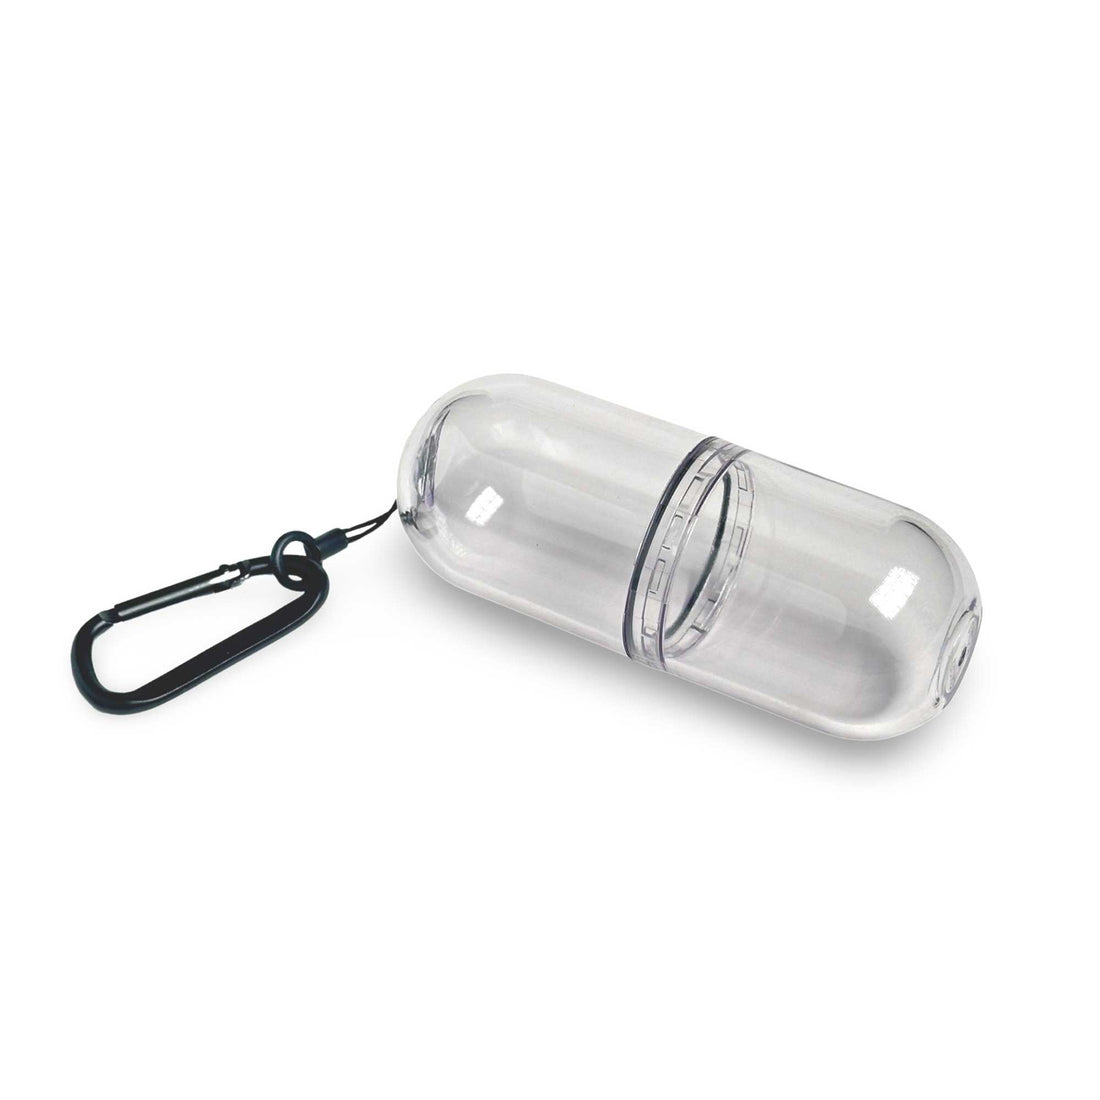  Nerdwax Glasses Wax - 4ct Value Pack, Stop Sliding Glasses, Anti-Slip Eyewear Retainer